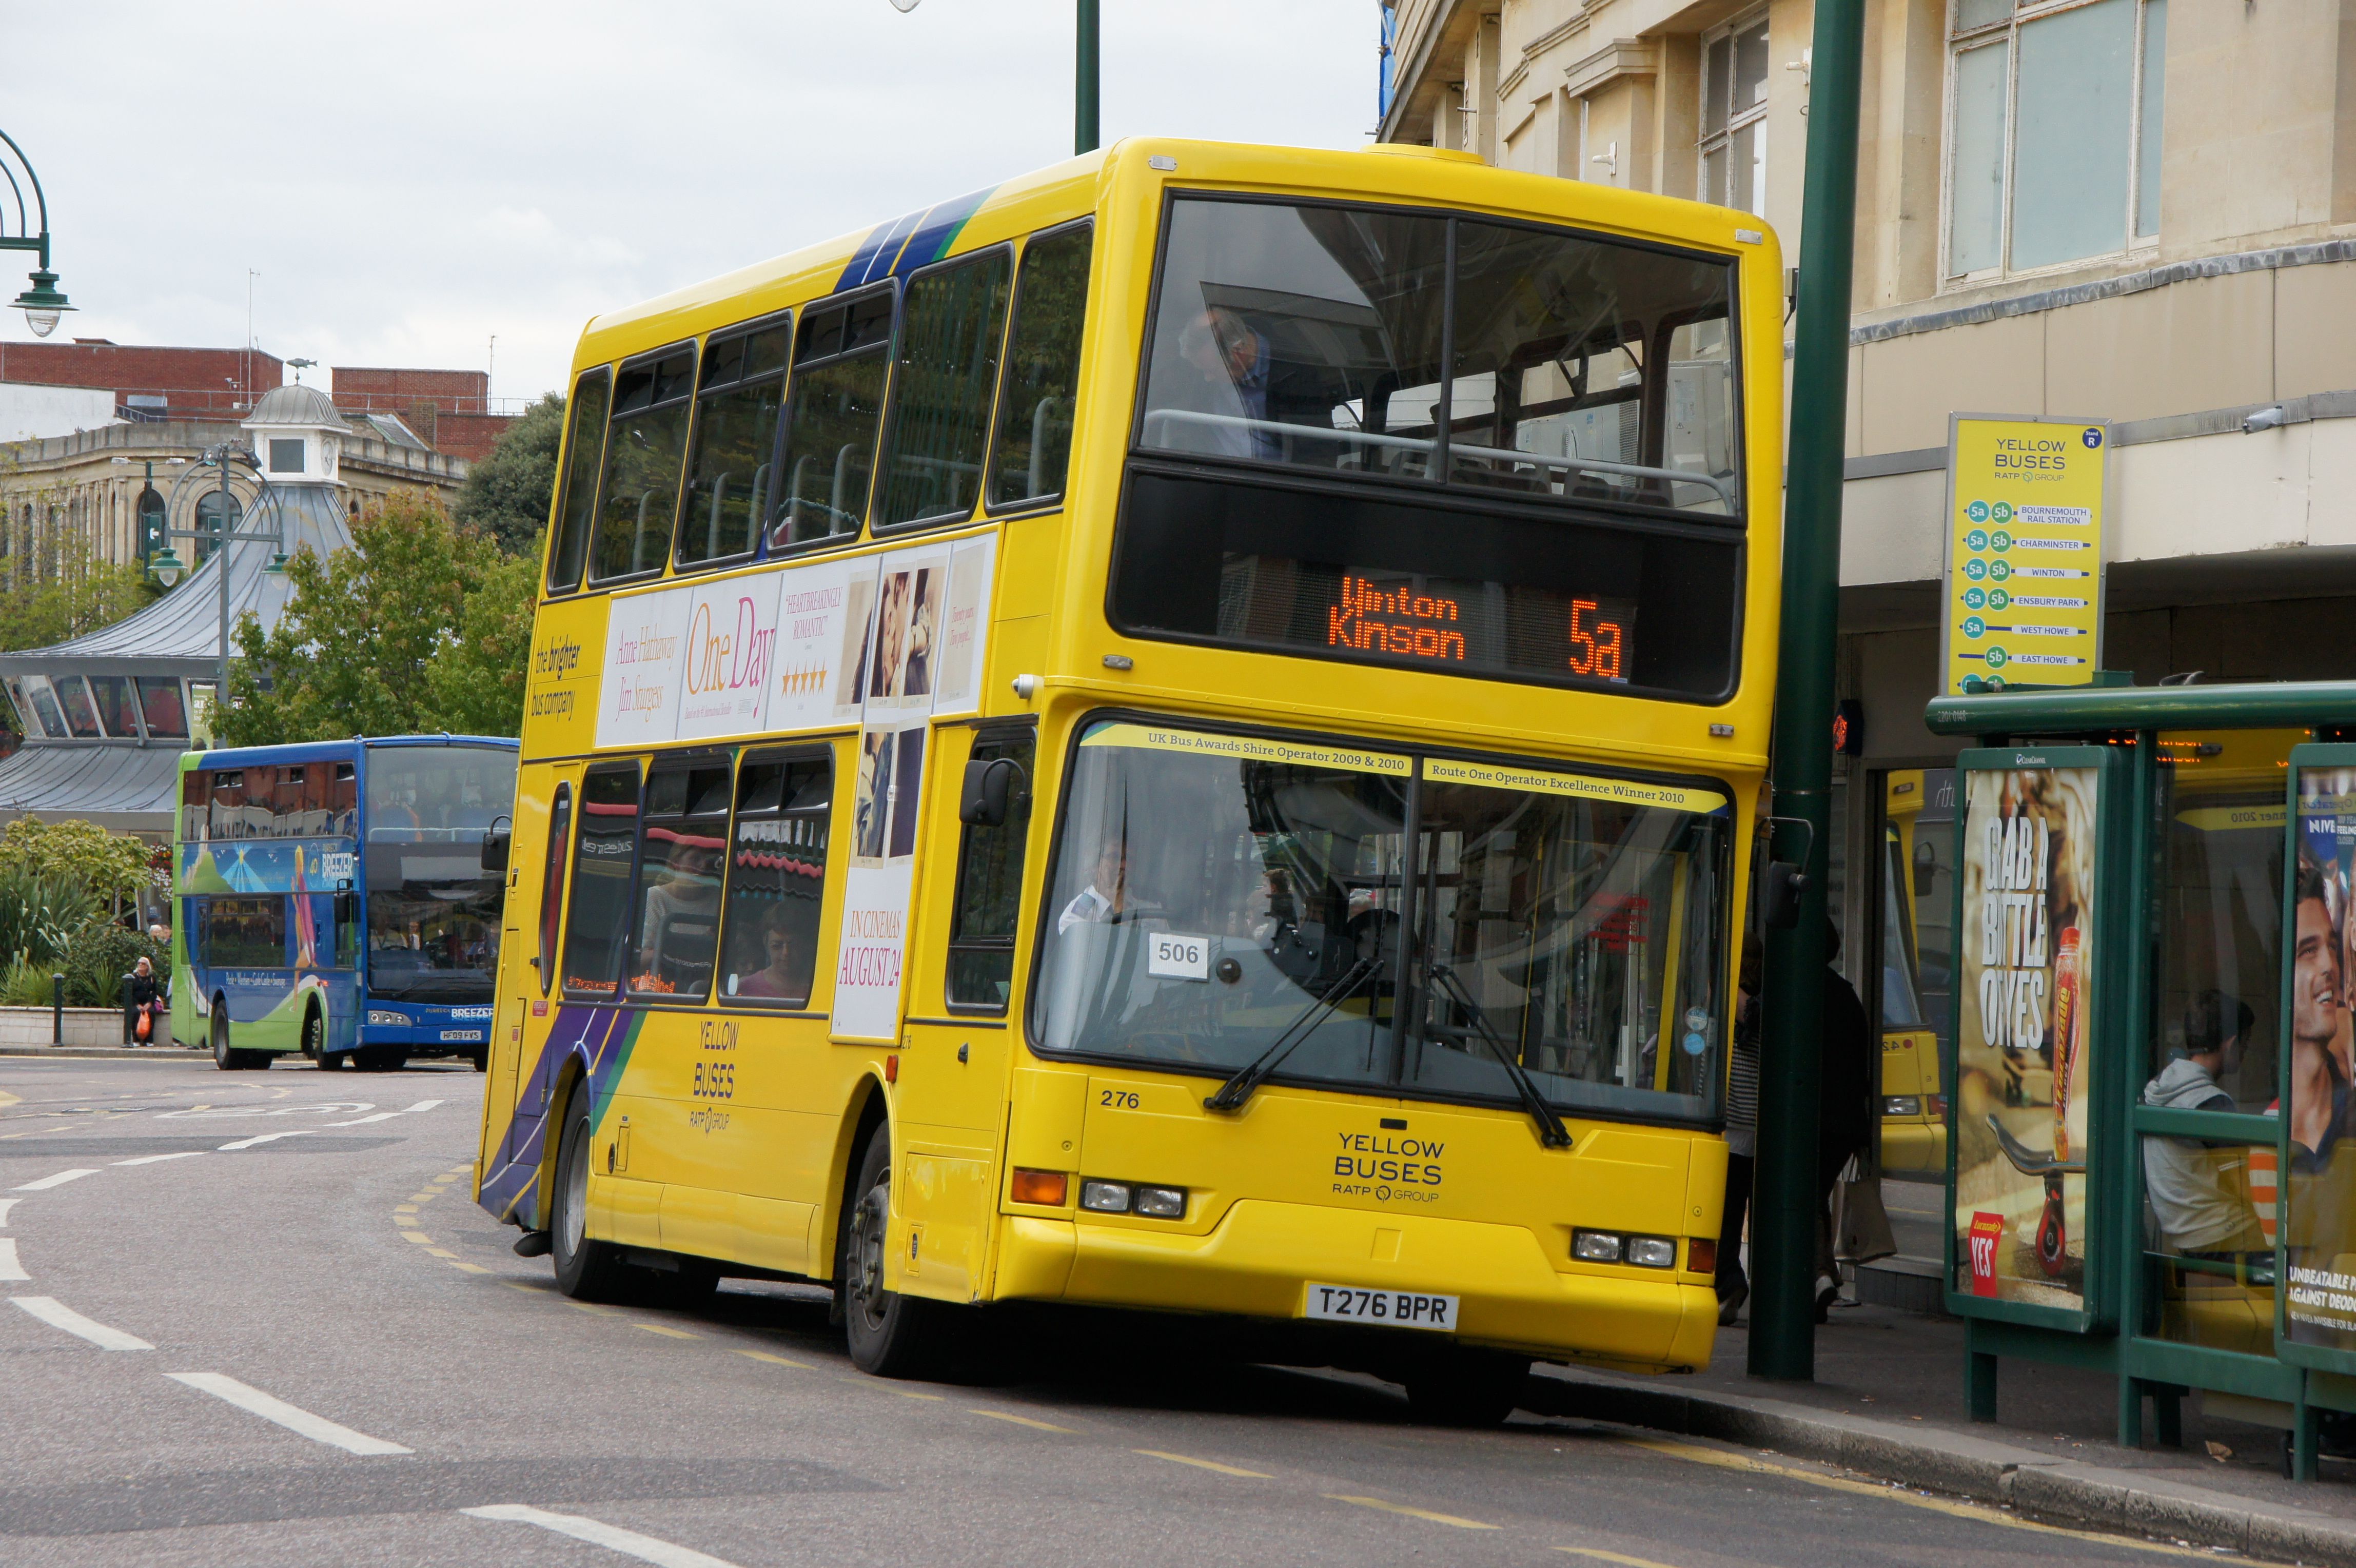 276 автобус маршрут. Автобусы в Европе. Автобус желтый. Автобус 276. Желтые автобусы Европы.